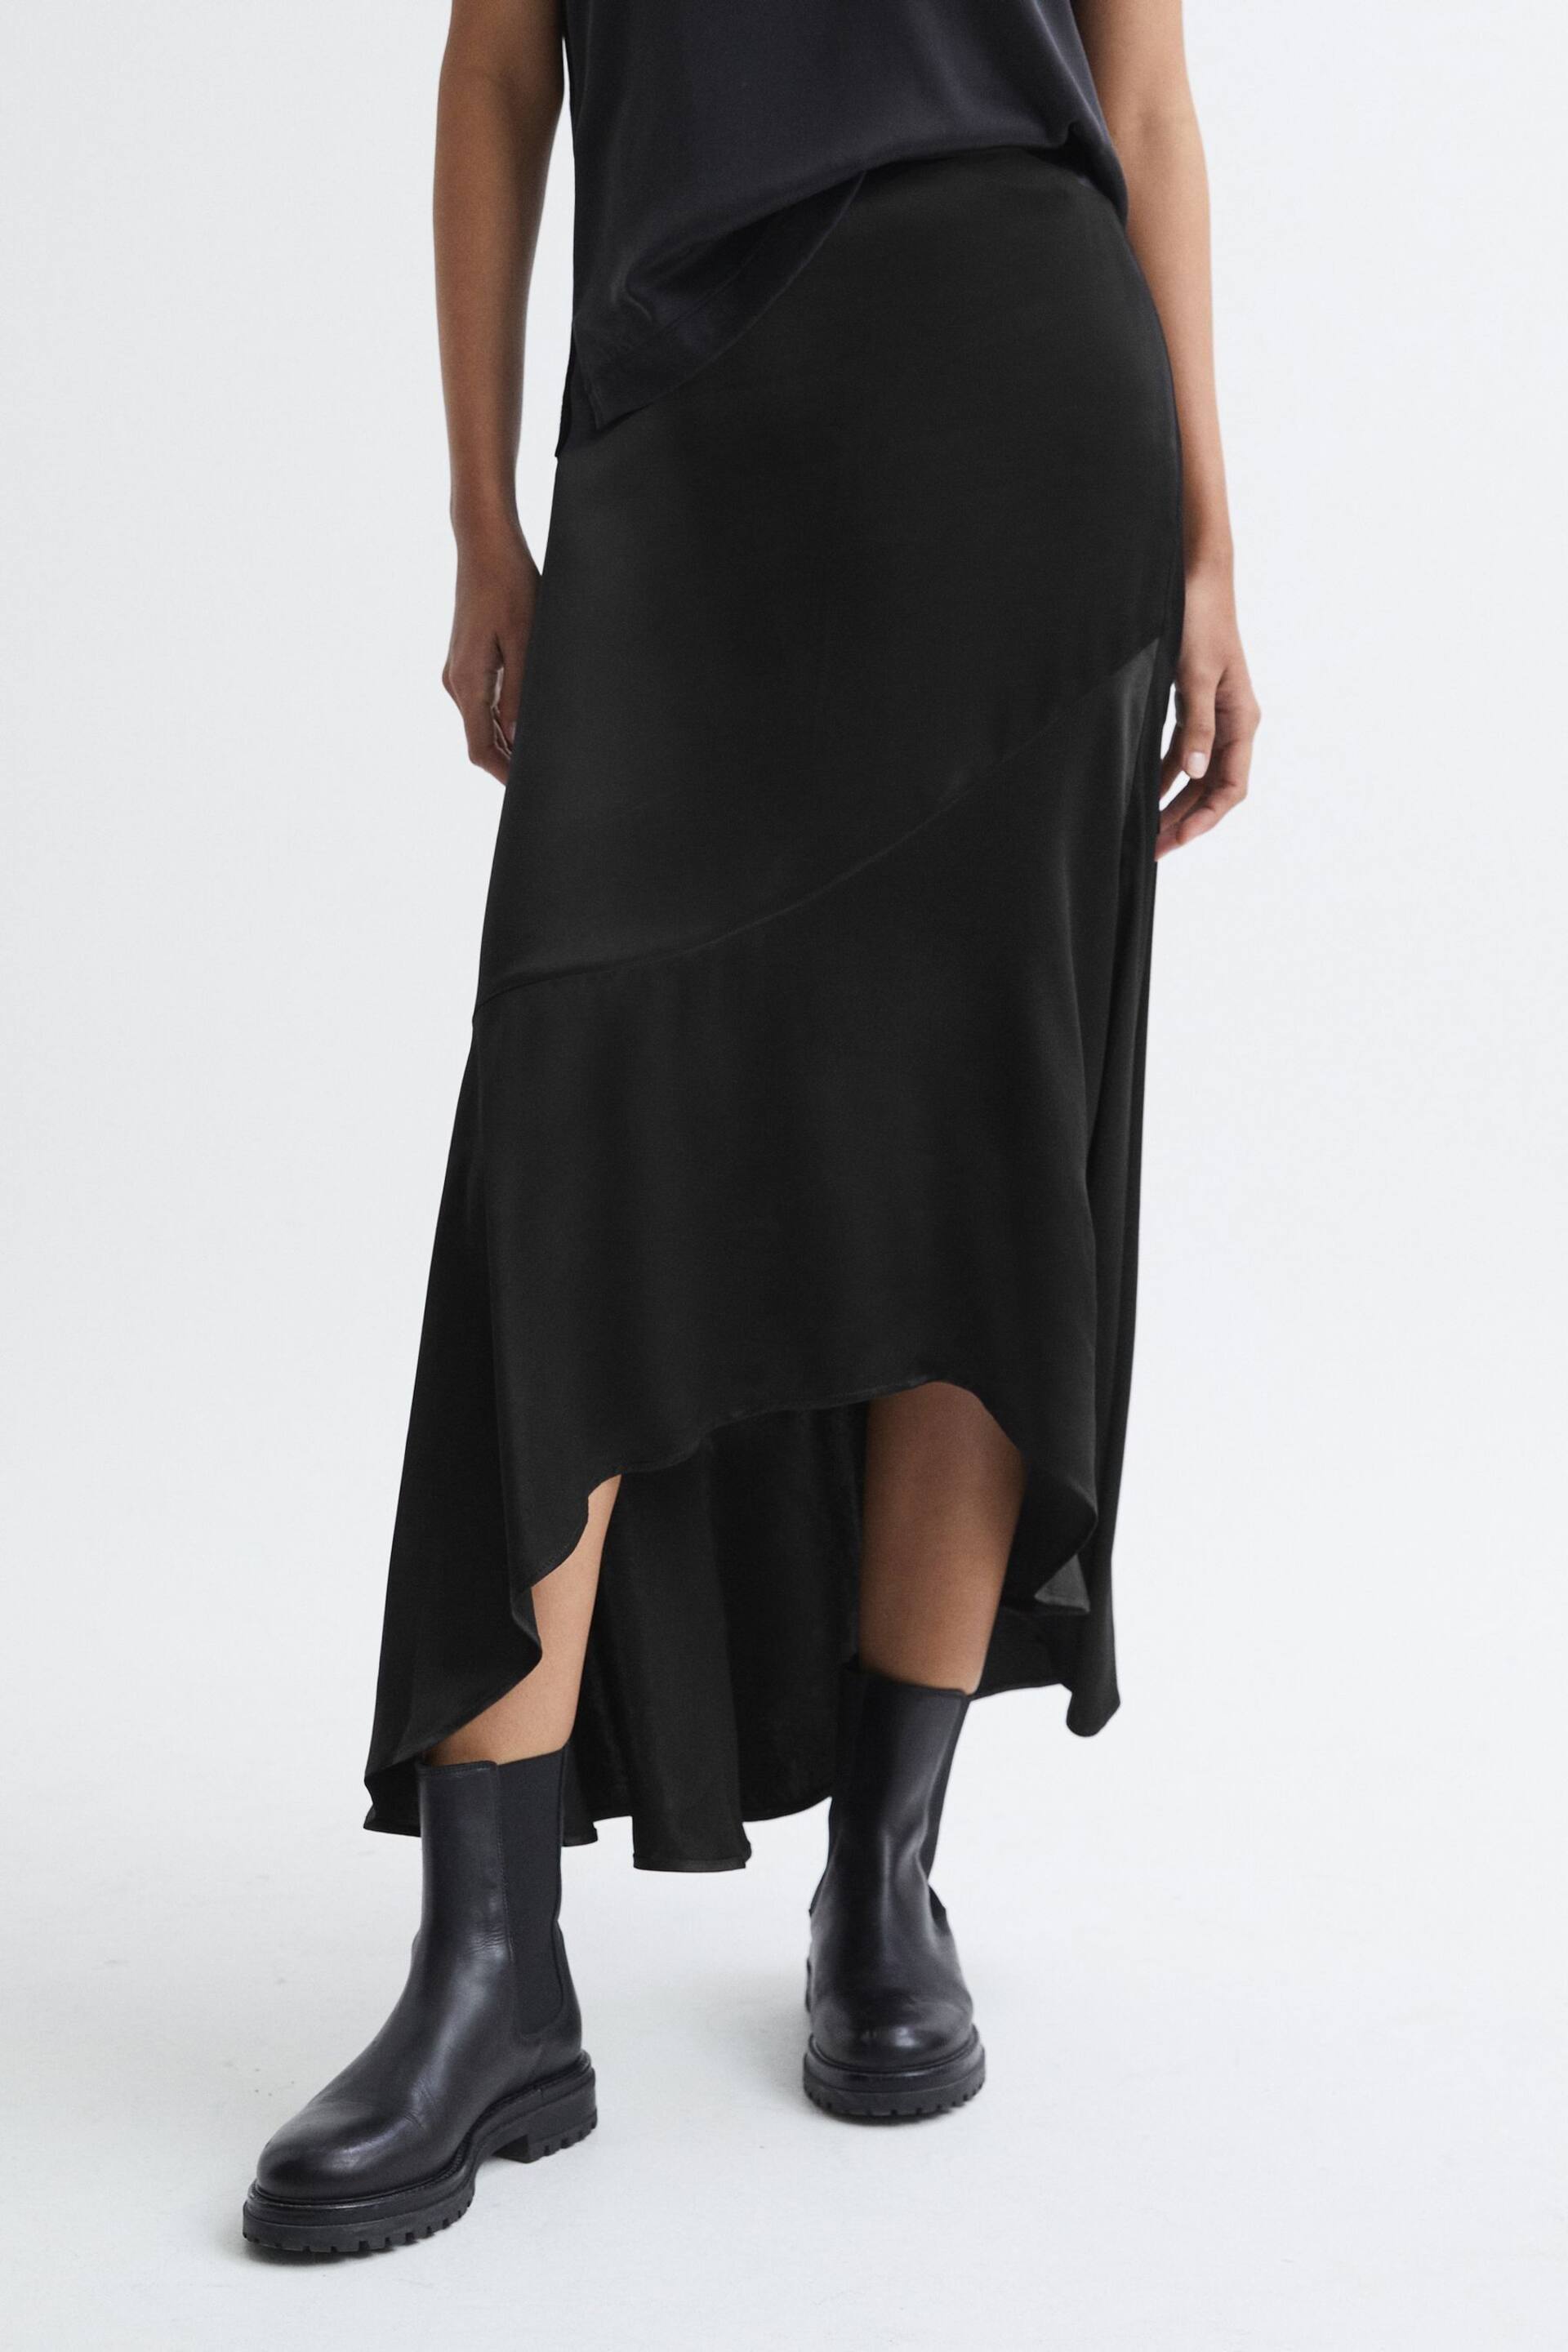 Reiss Black Inga Satin High Rise Midi Skirt - Image 1 of 6